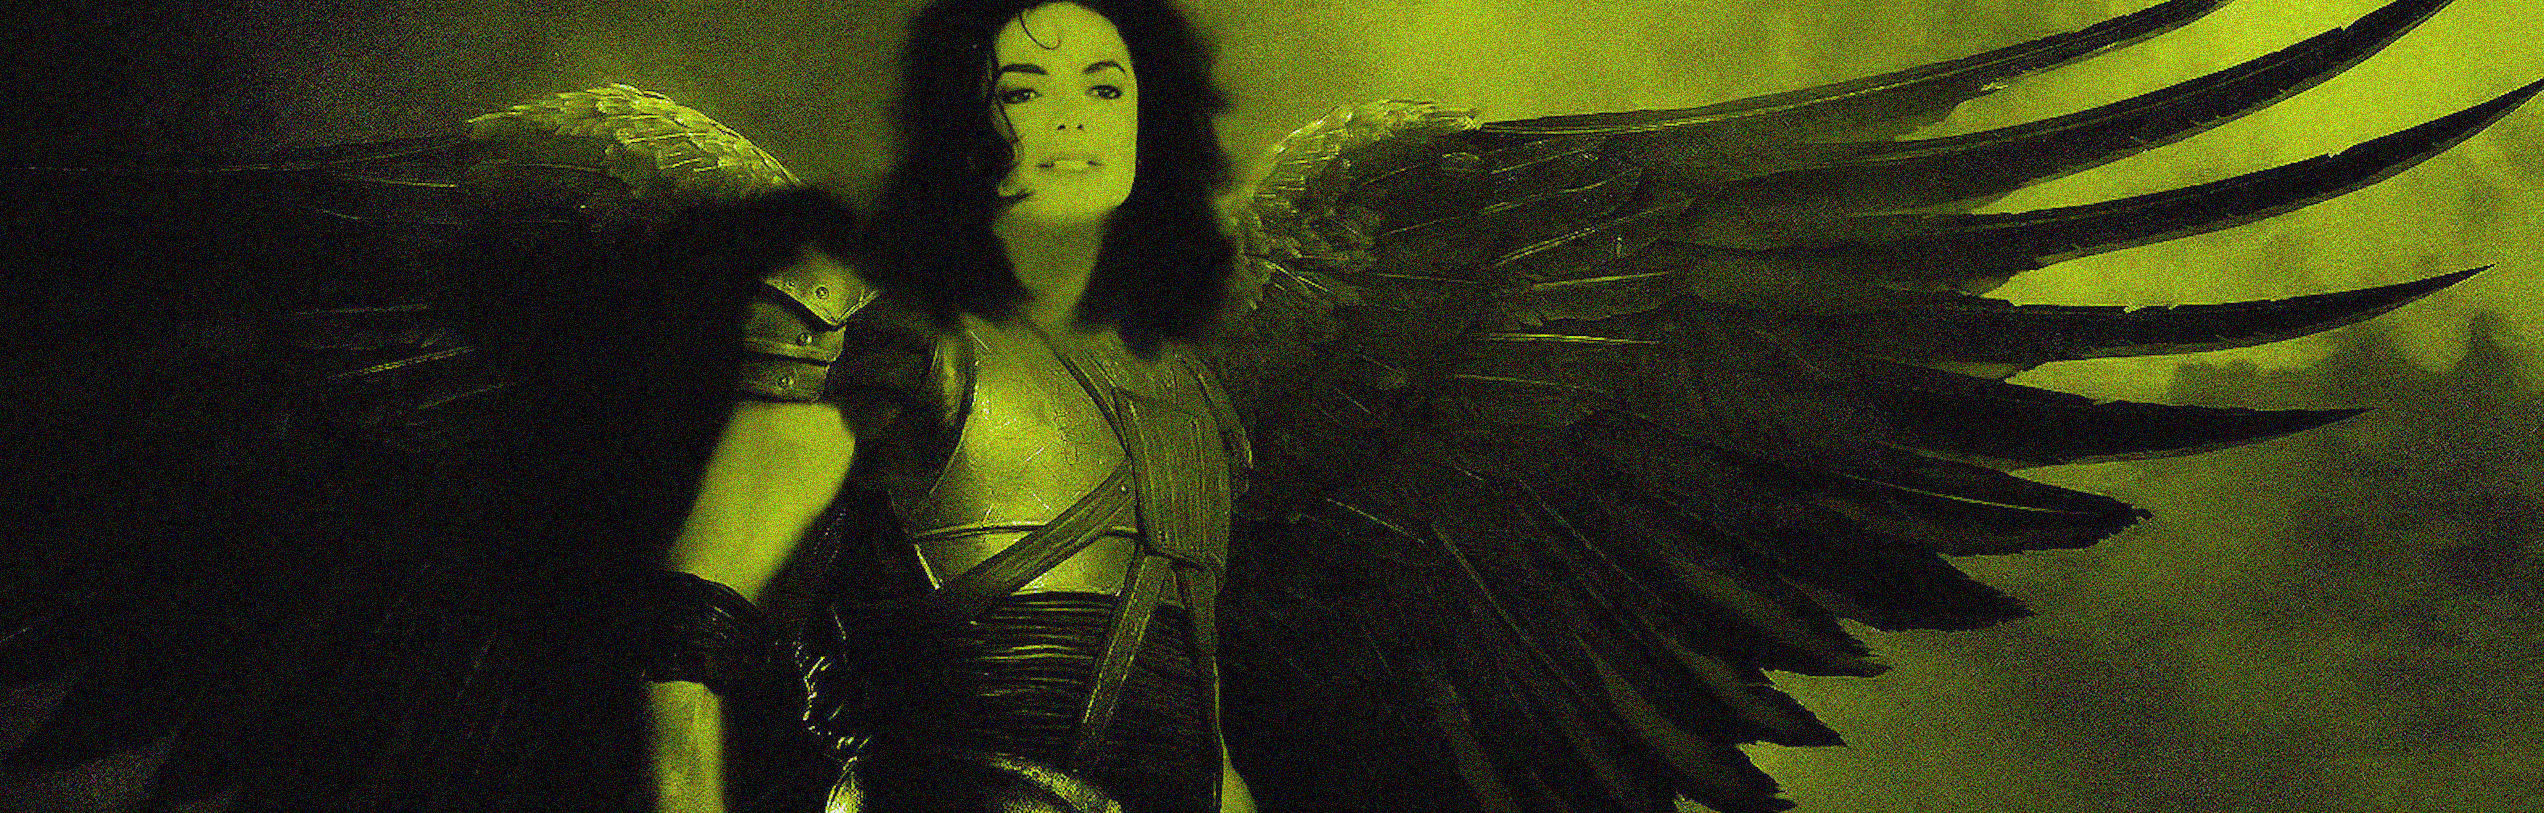 Michael Jackson images Archangel Michael HD wallpaper and